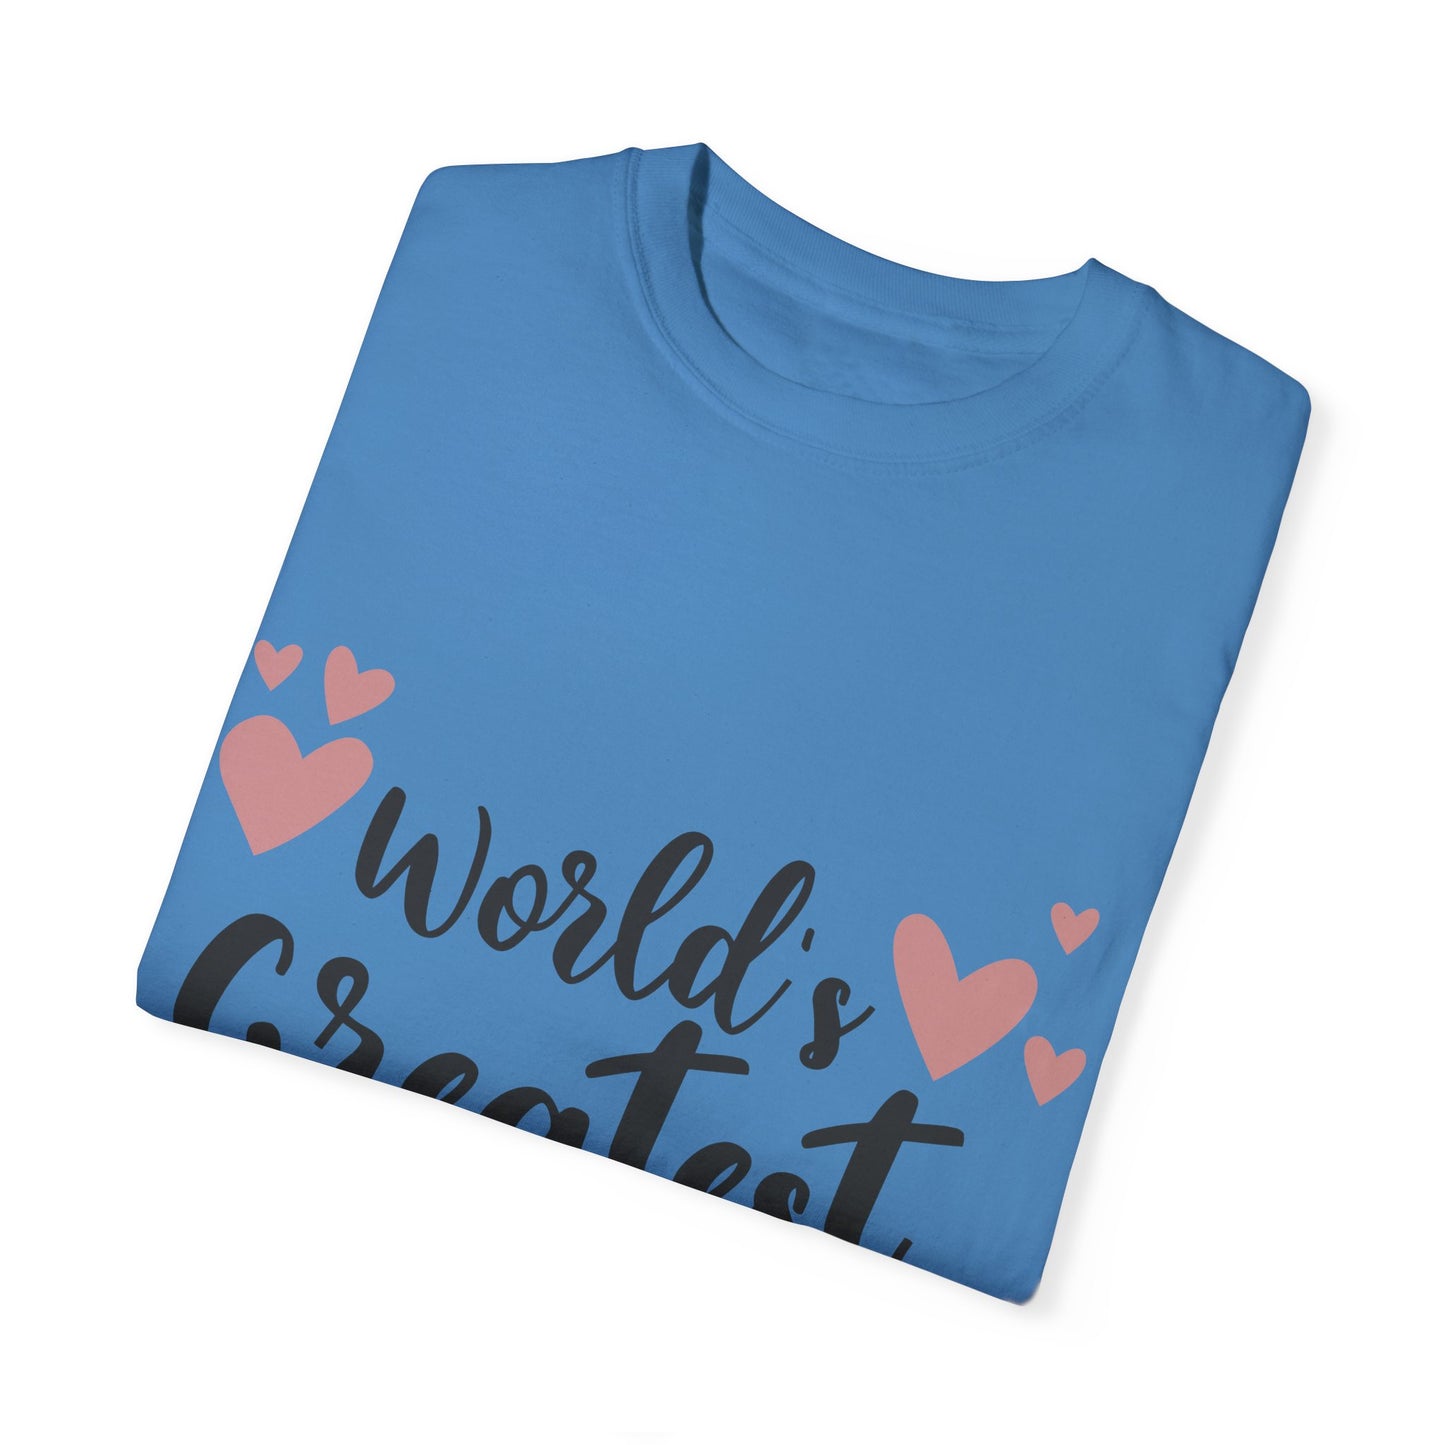 World greatest mom - Unisex Garment-Dyed T-shirt